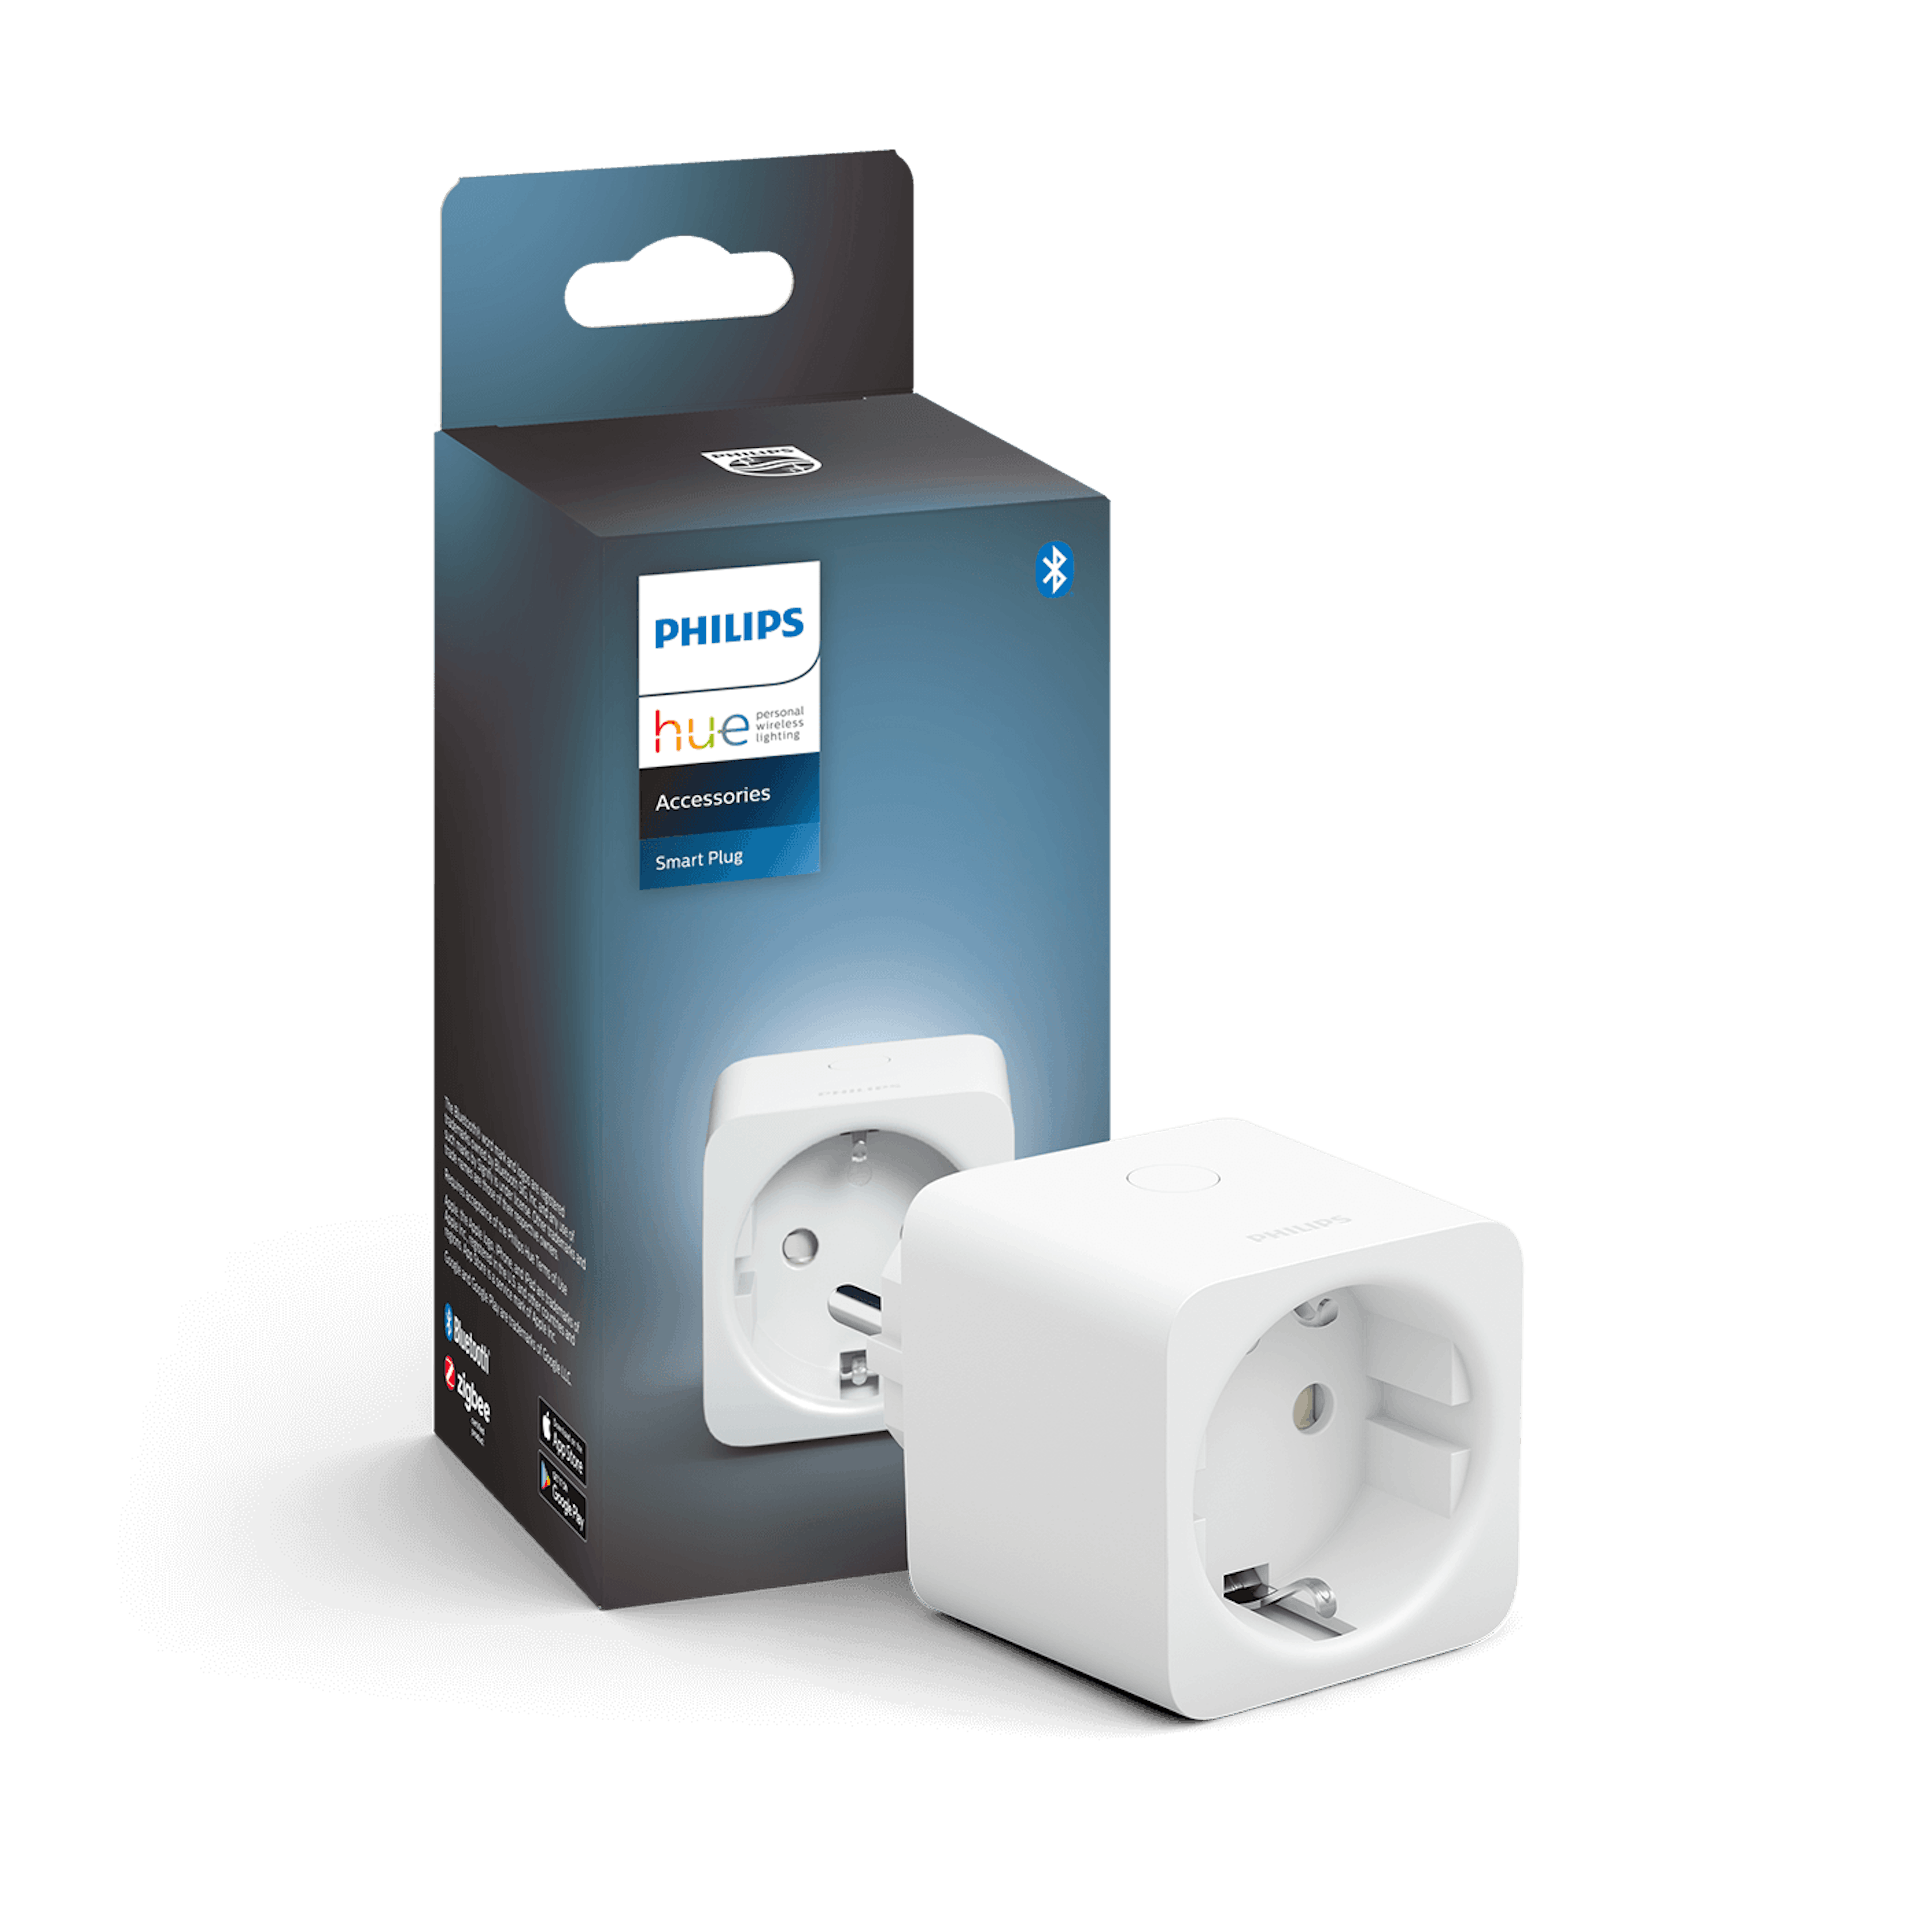 Philips Hue Smart Plug (G2) - Packaging Image